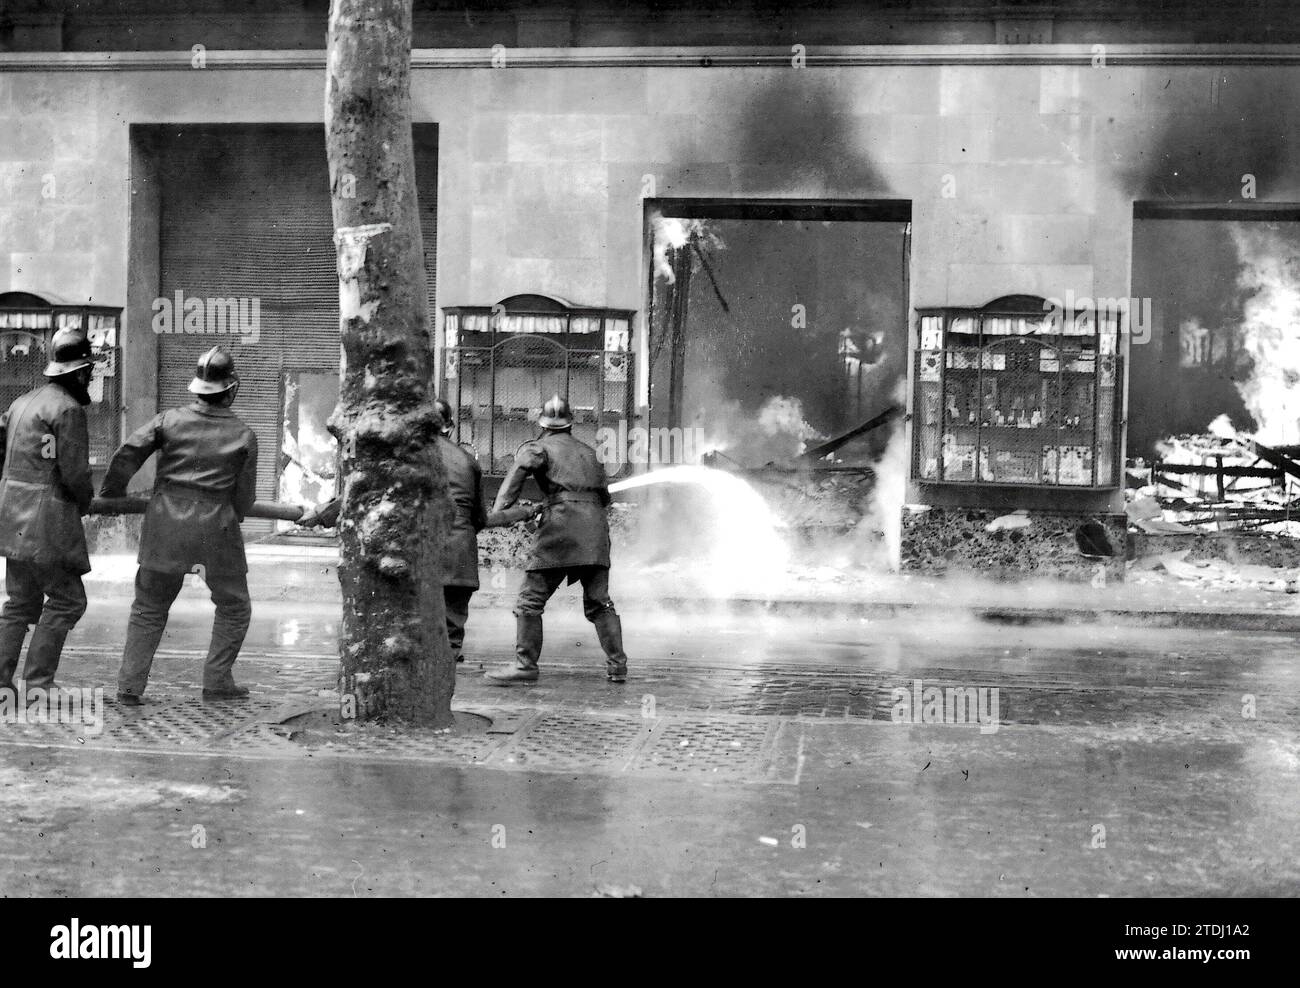 12/24/1932. Fire in Barcelona at the 'el Siglo' Warehouses Photo: Brangulí. Credit: Album / Archivo ABC / Josep Brangulí Stock Photo